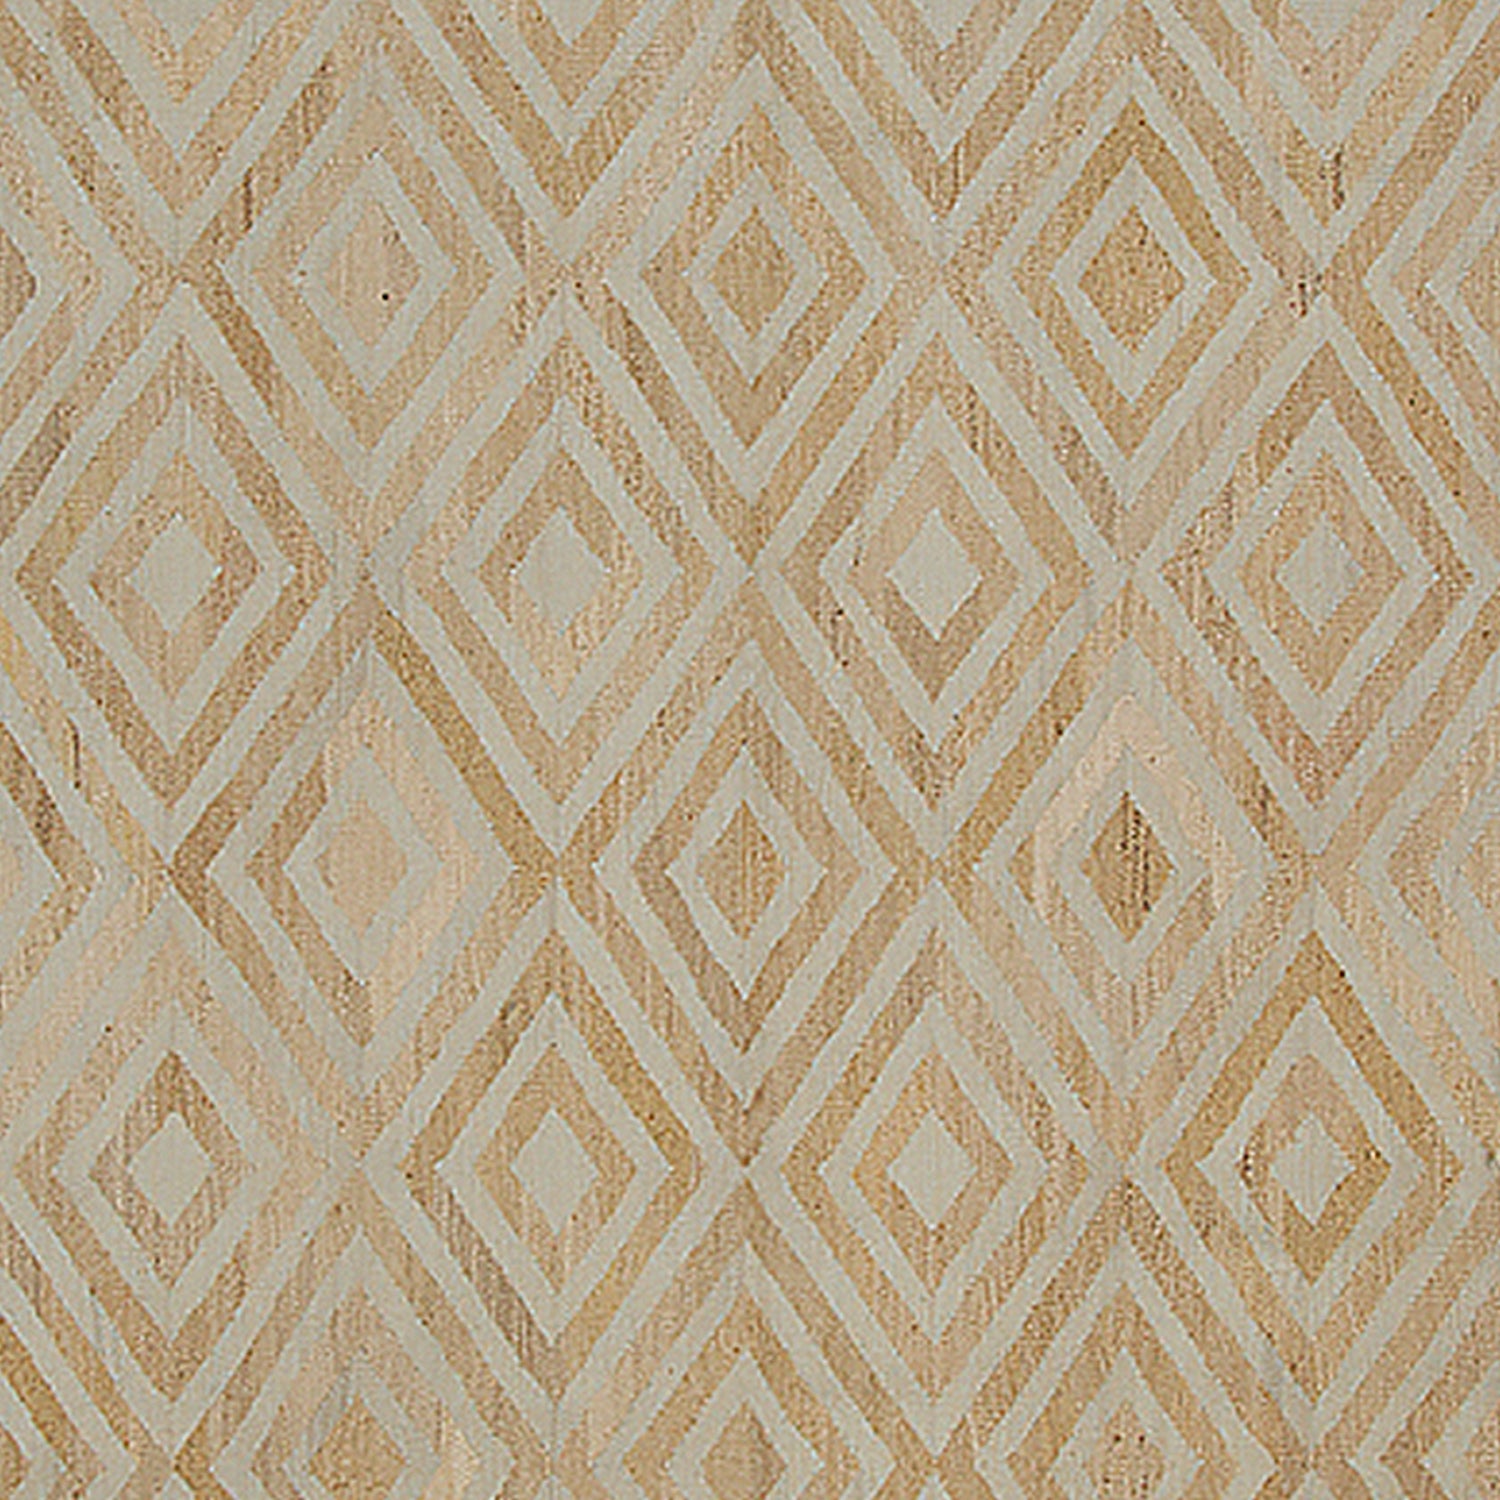 Woven rug swatch in an interlocking diamond pattern in white on a mottled cream field.